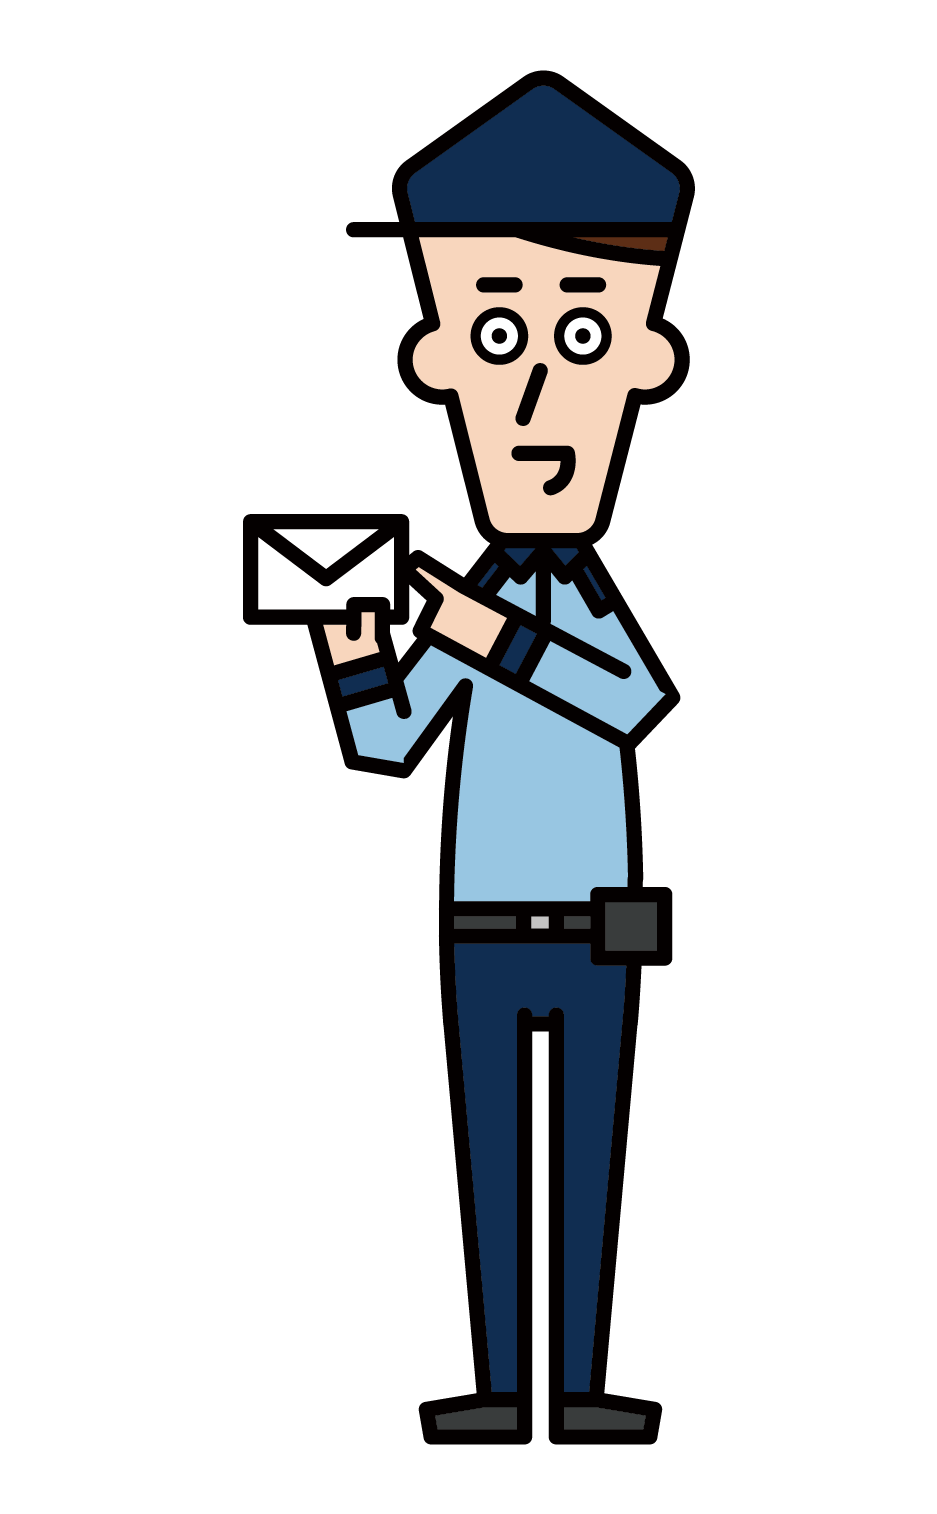 Postbox illustration